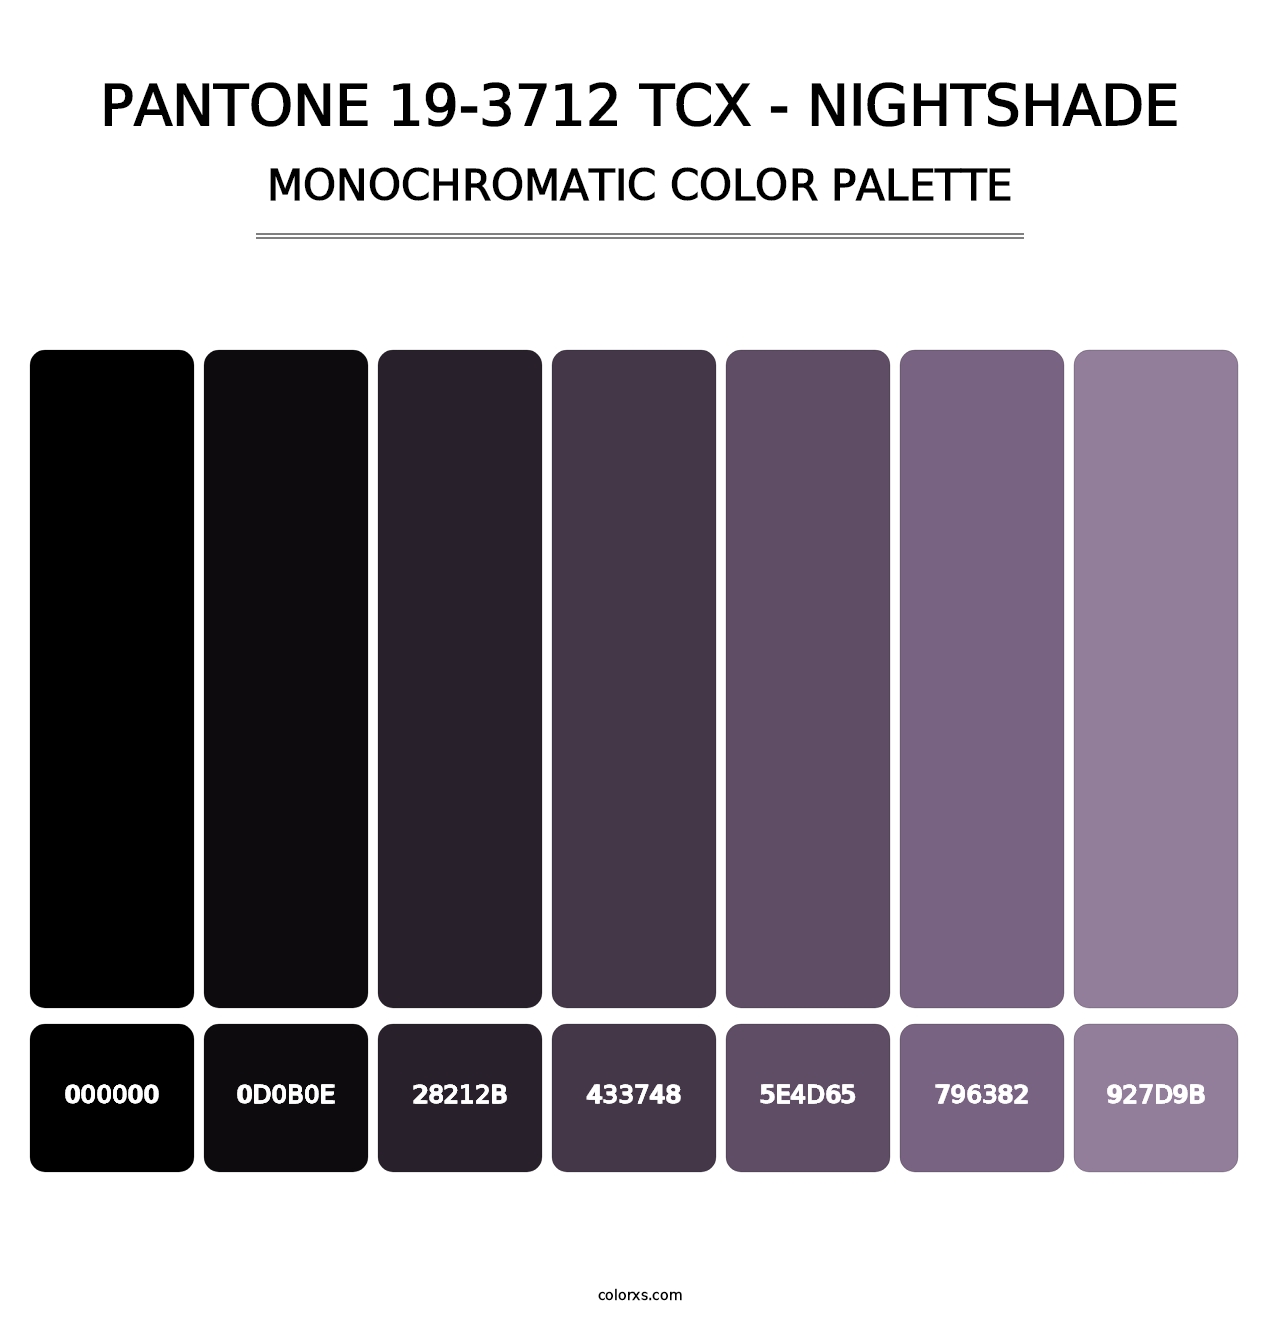 PANTONE 19-3712 TCX - Nightshade - Monochromatic Color Palette